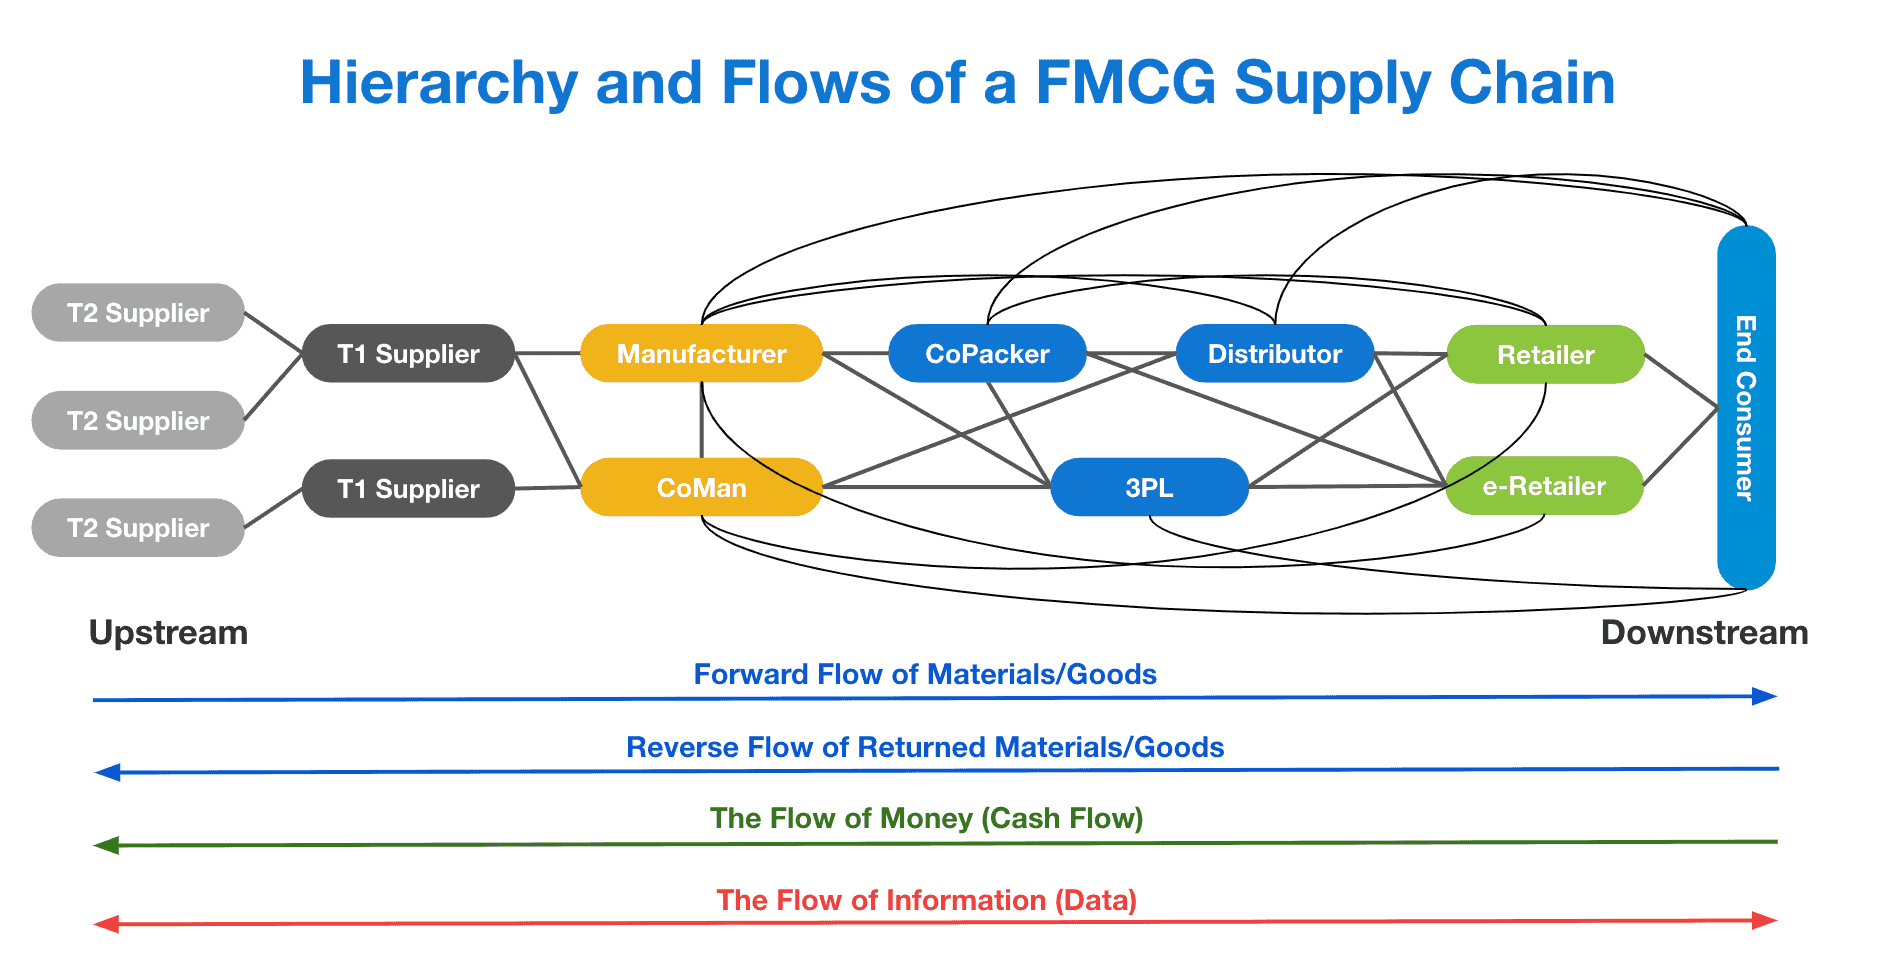 FMCG Supply Chain Hierarchy